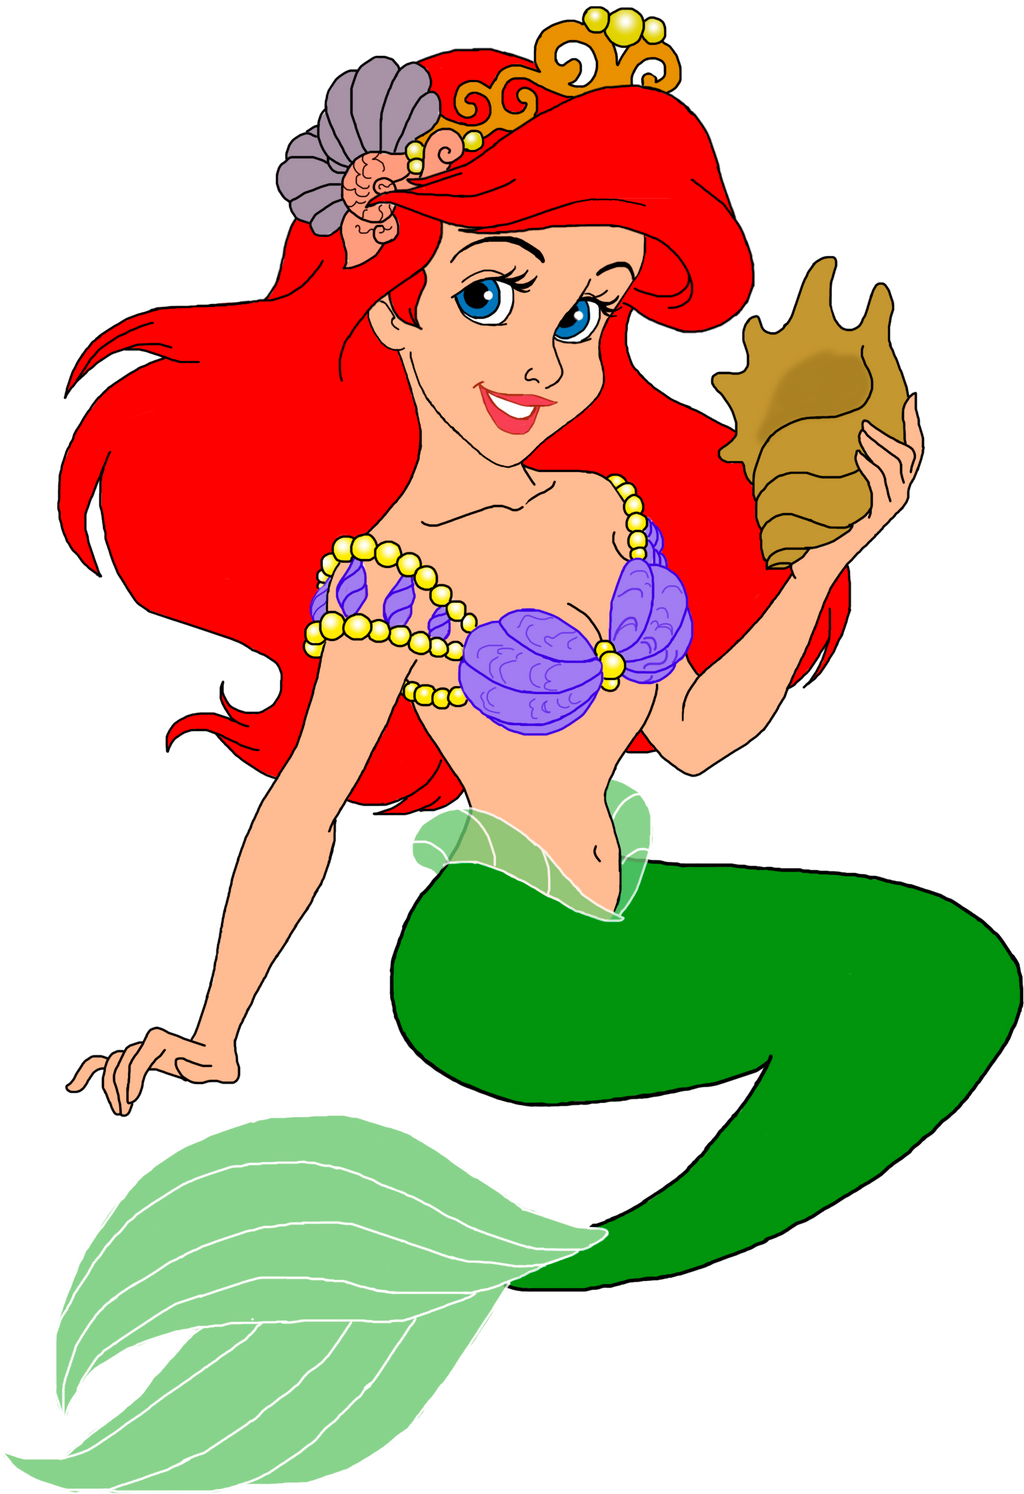 Ariel holding a seashell by mermaidlover1992 on DeviantArt